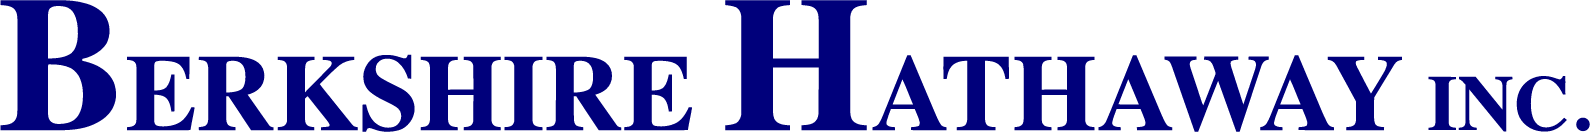 Berkshire Hathaway  logo large (transparent PNG)